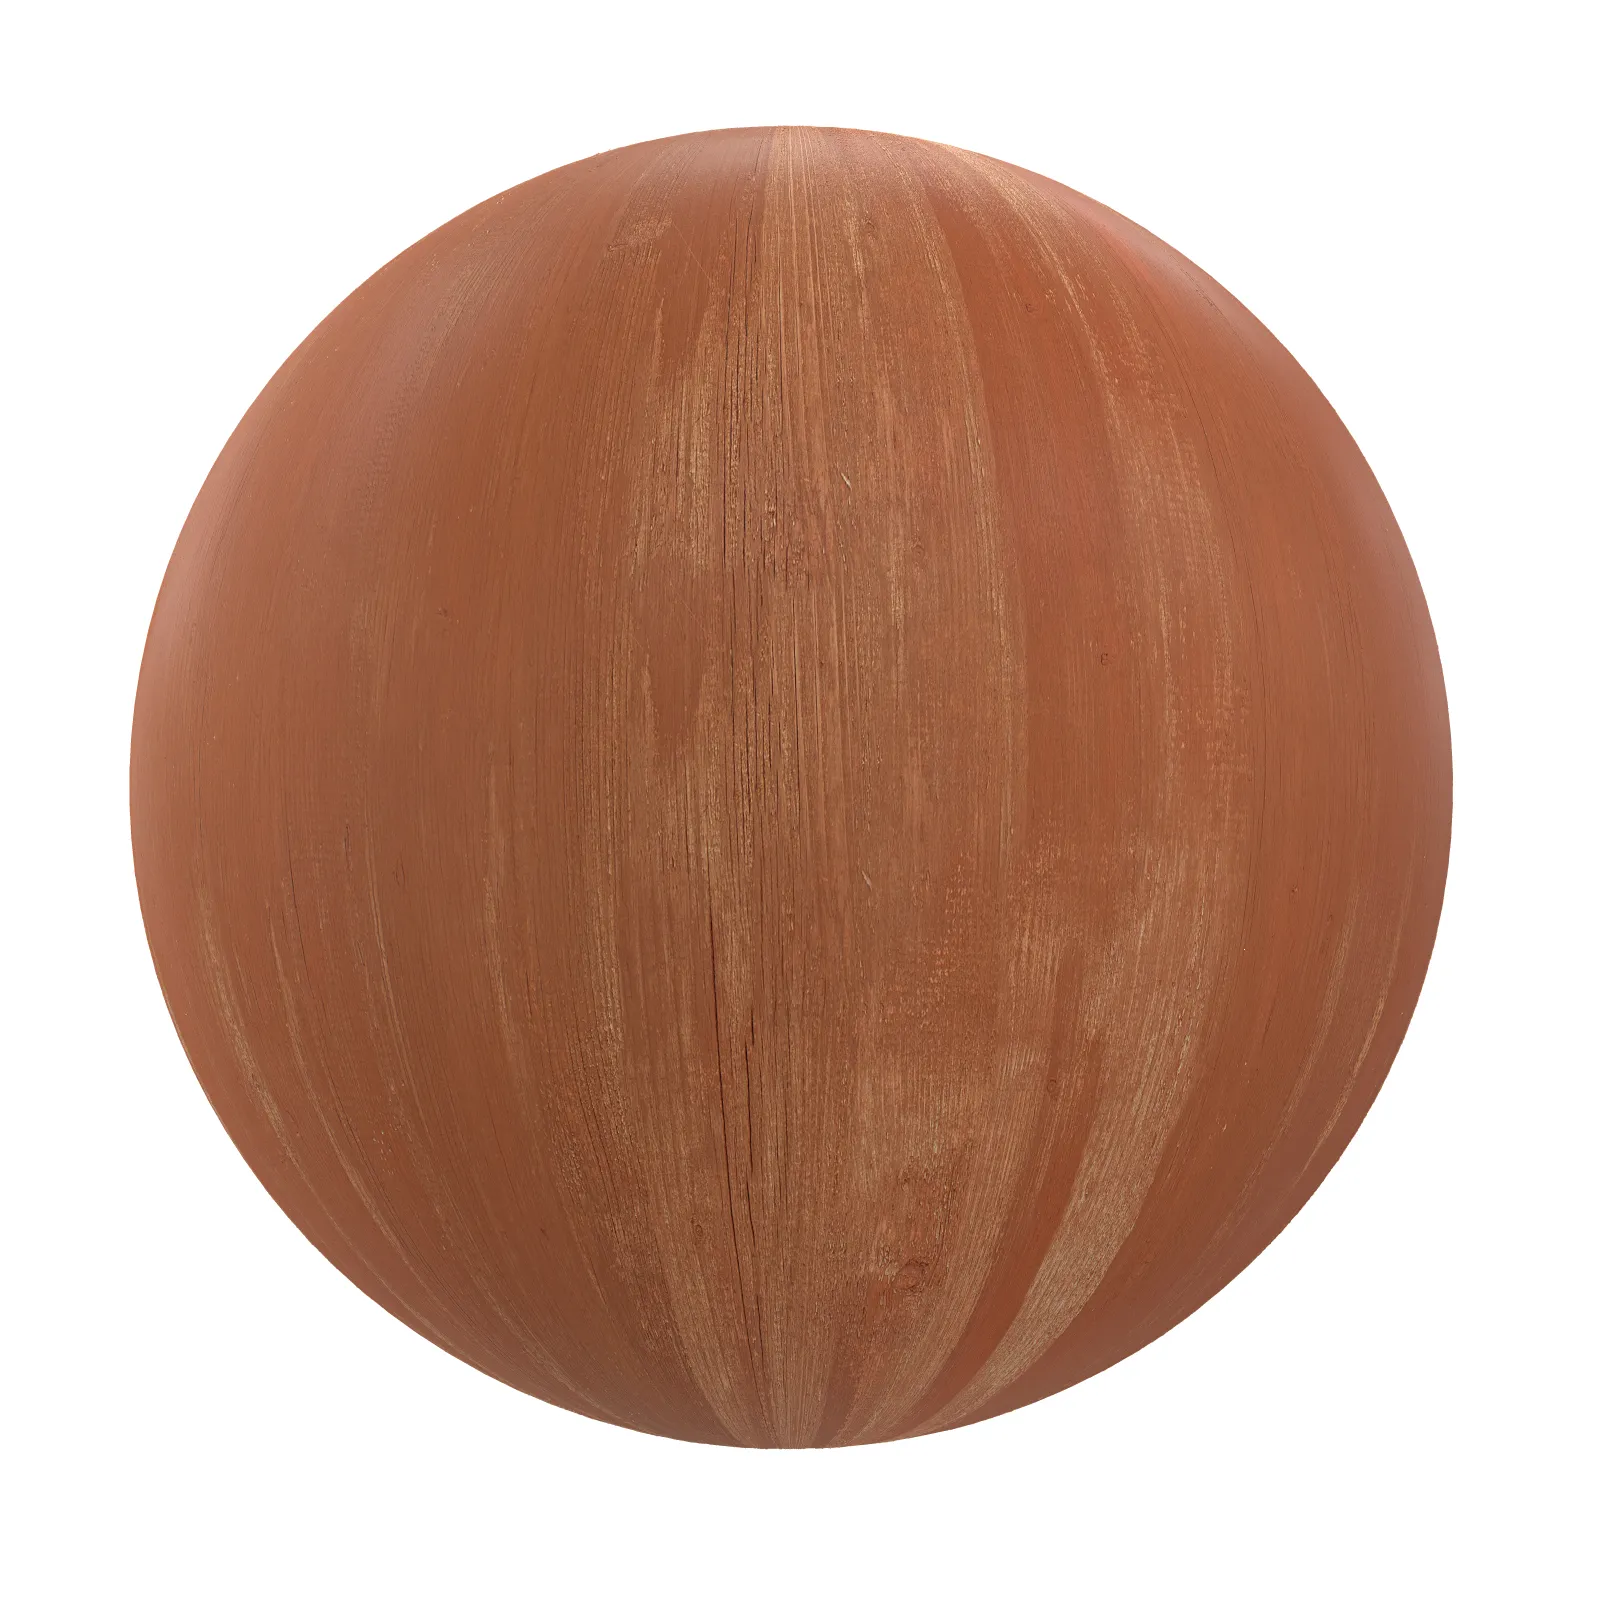 3ds Max Files – Texture – 8 – Wood Texture – 125 – Wood Texture by Minh Nguyen.